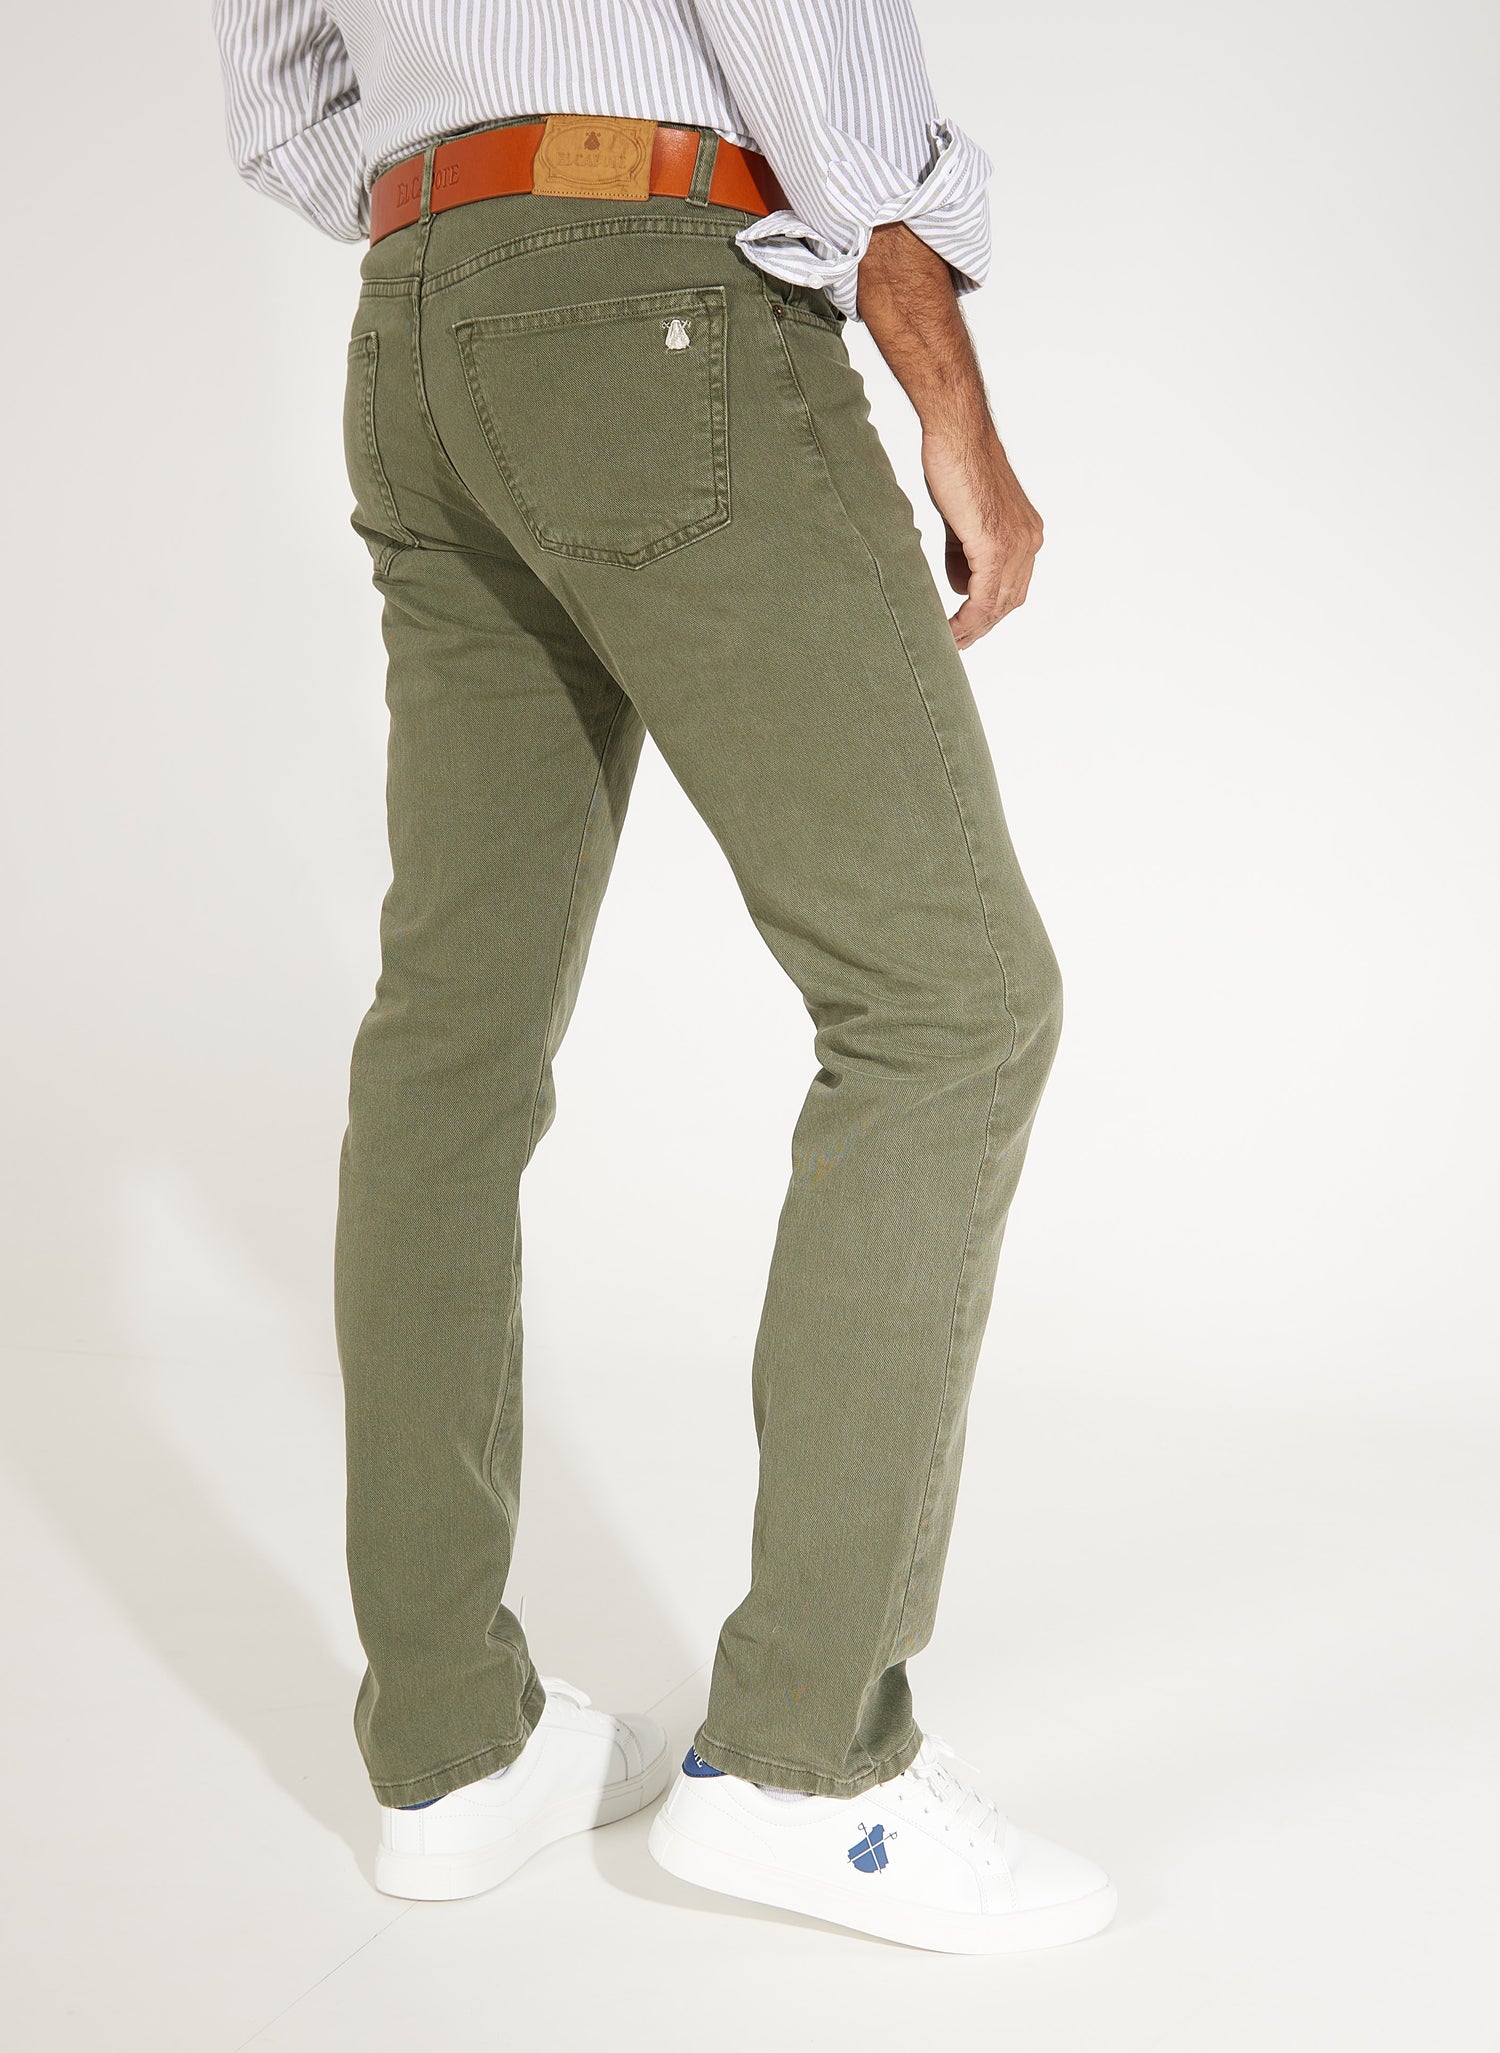 Khaki Green Pants 5 Pockets Man